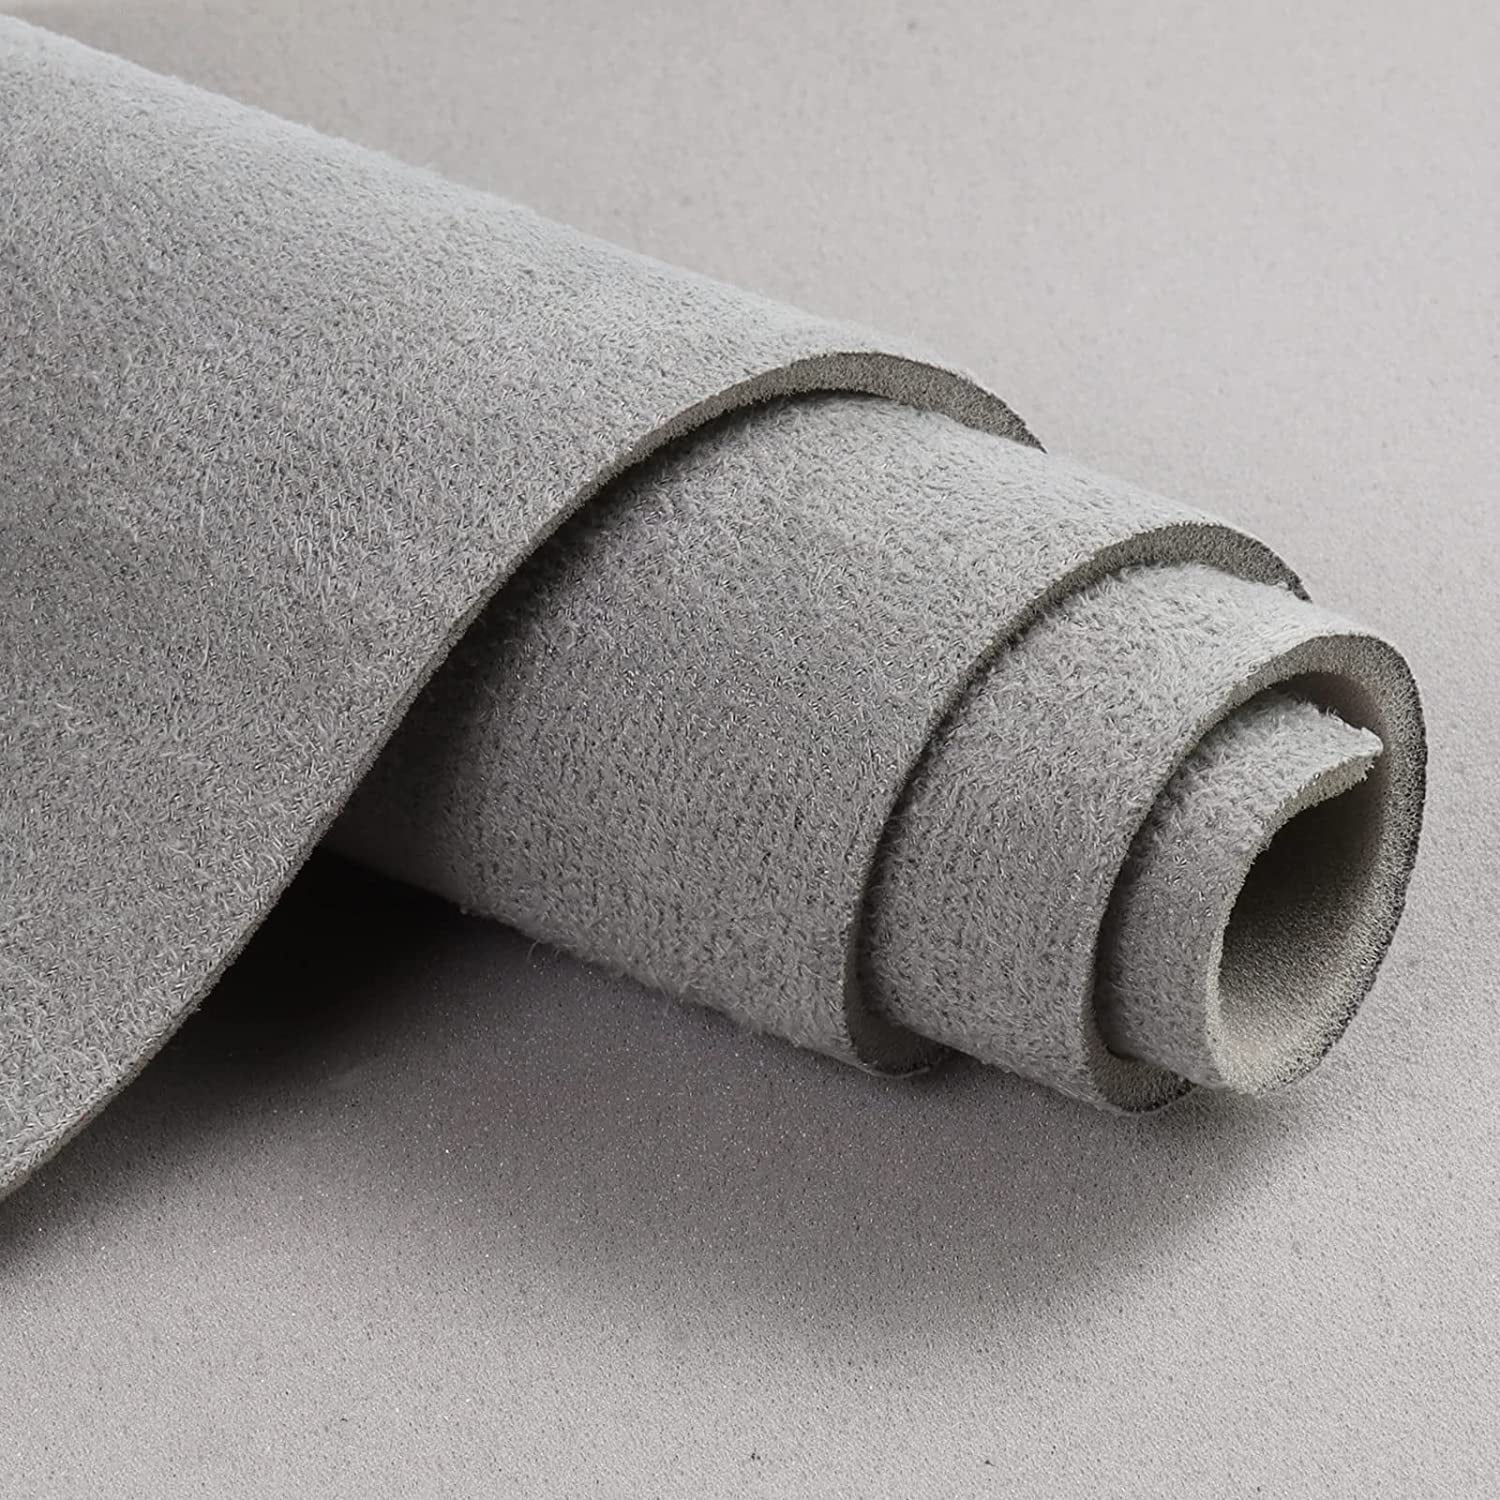 Headliner Fabric Material Fits Mini Cooper - Ox Gray